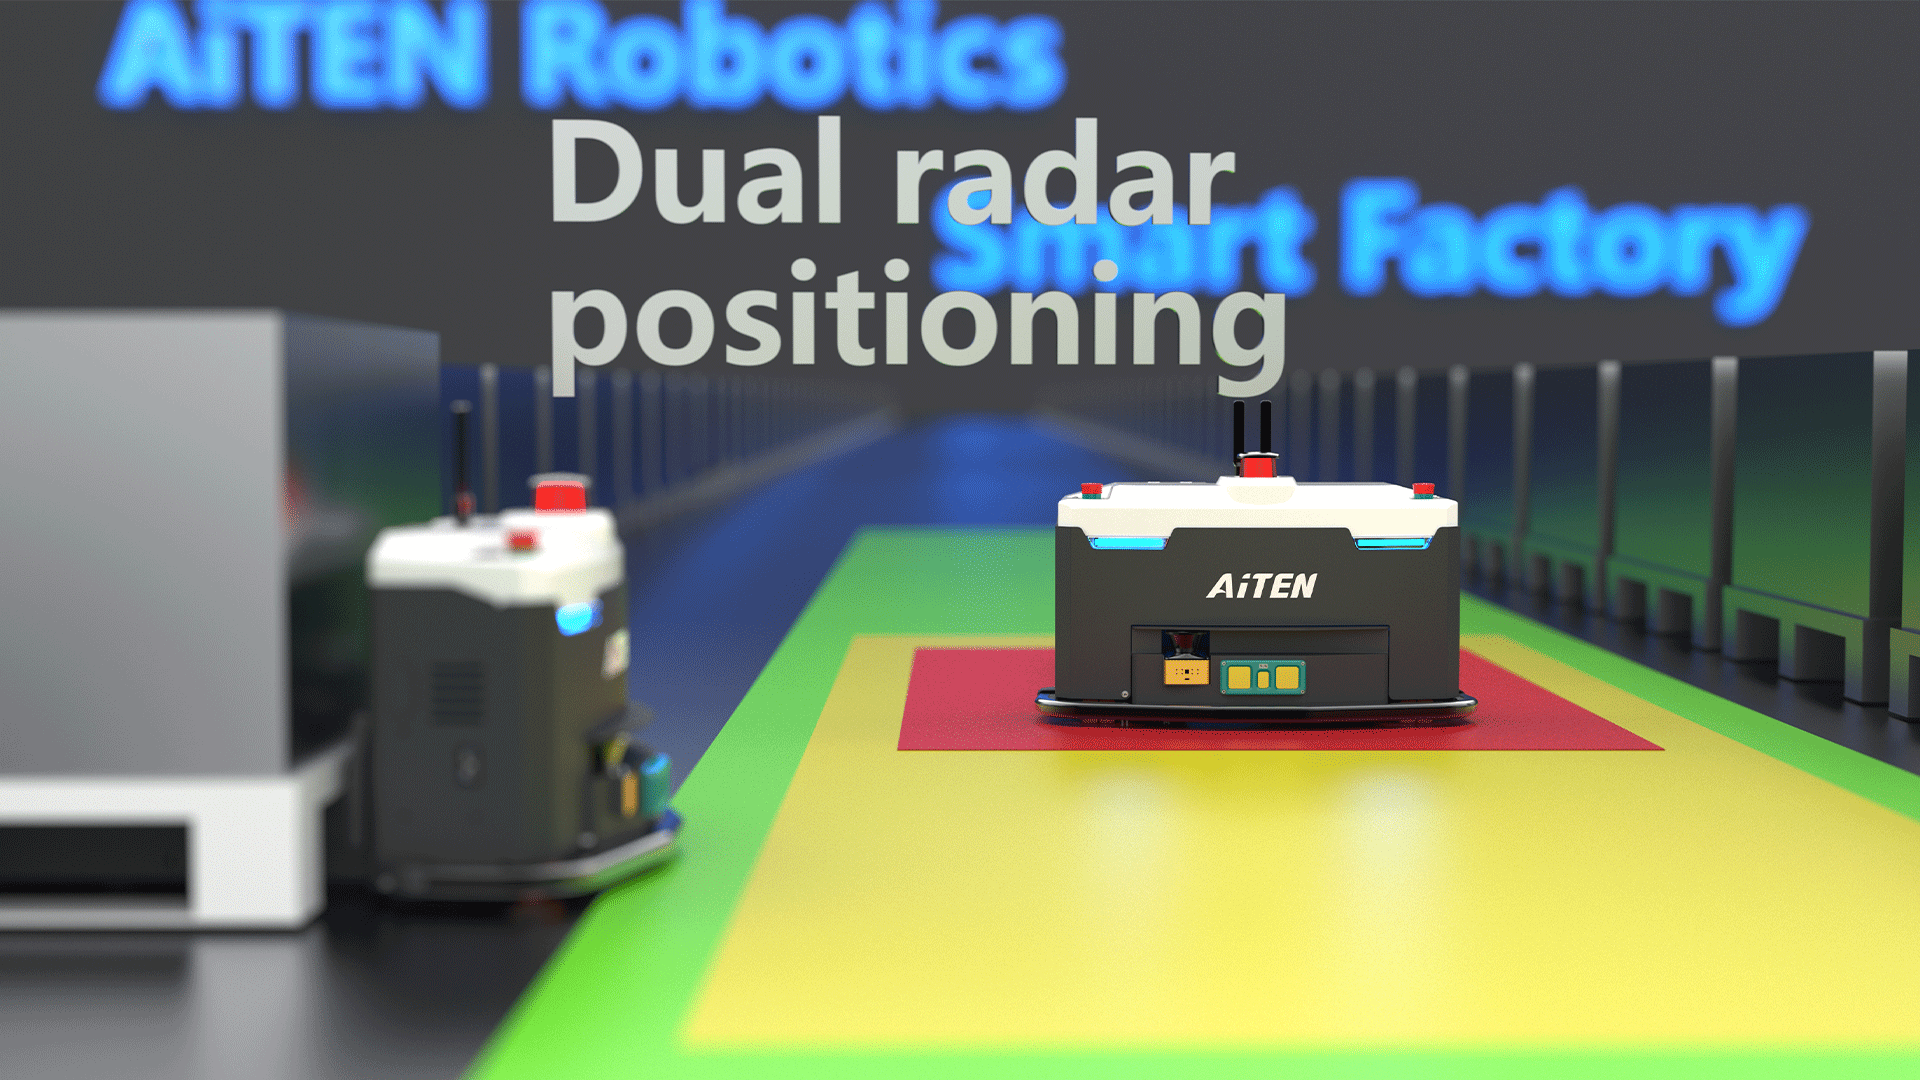 AiTEN Robots Dual rader positioning system